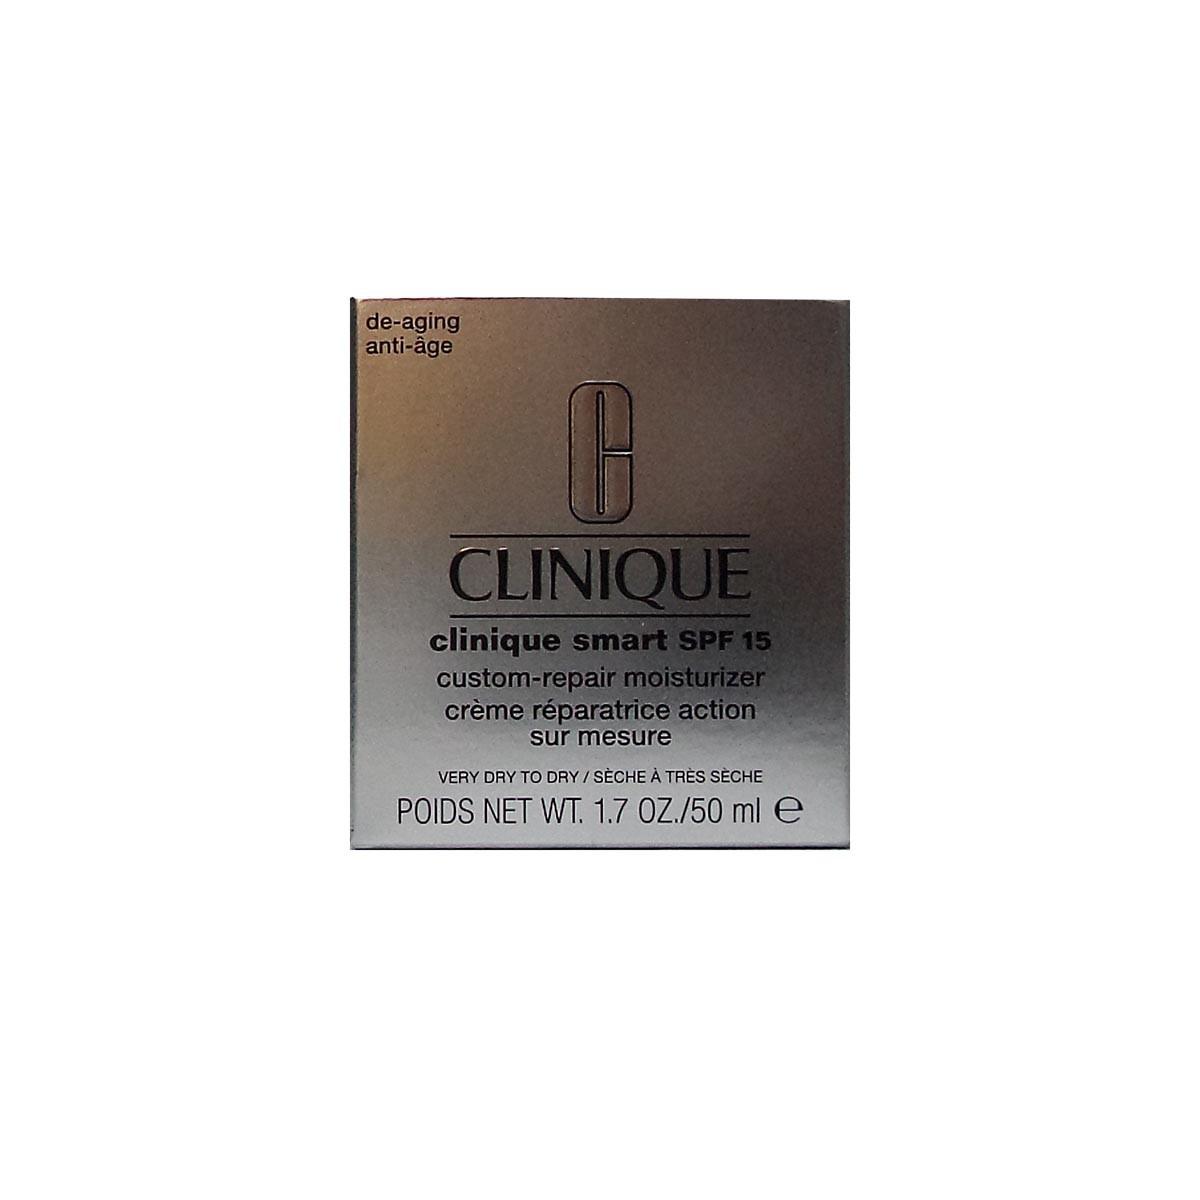 clinique-creme-smart-spf15-custom-repair-moisturizer-antiage-seche-a-tres-seche-50ml-i